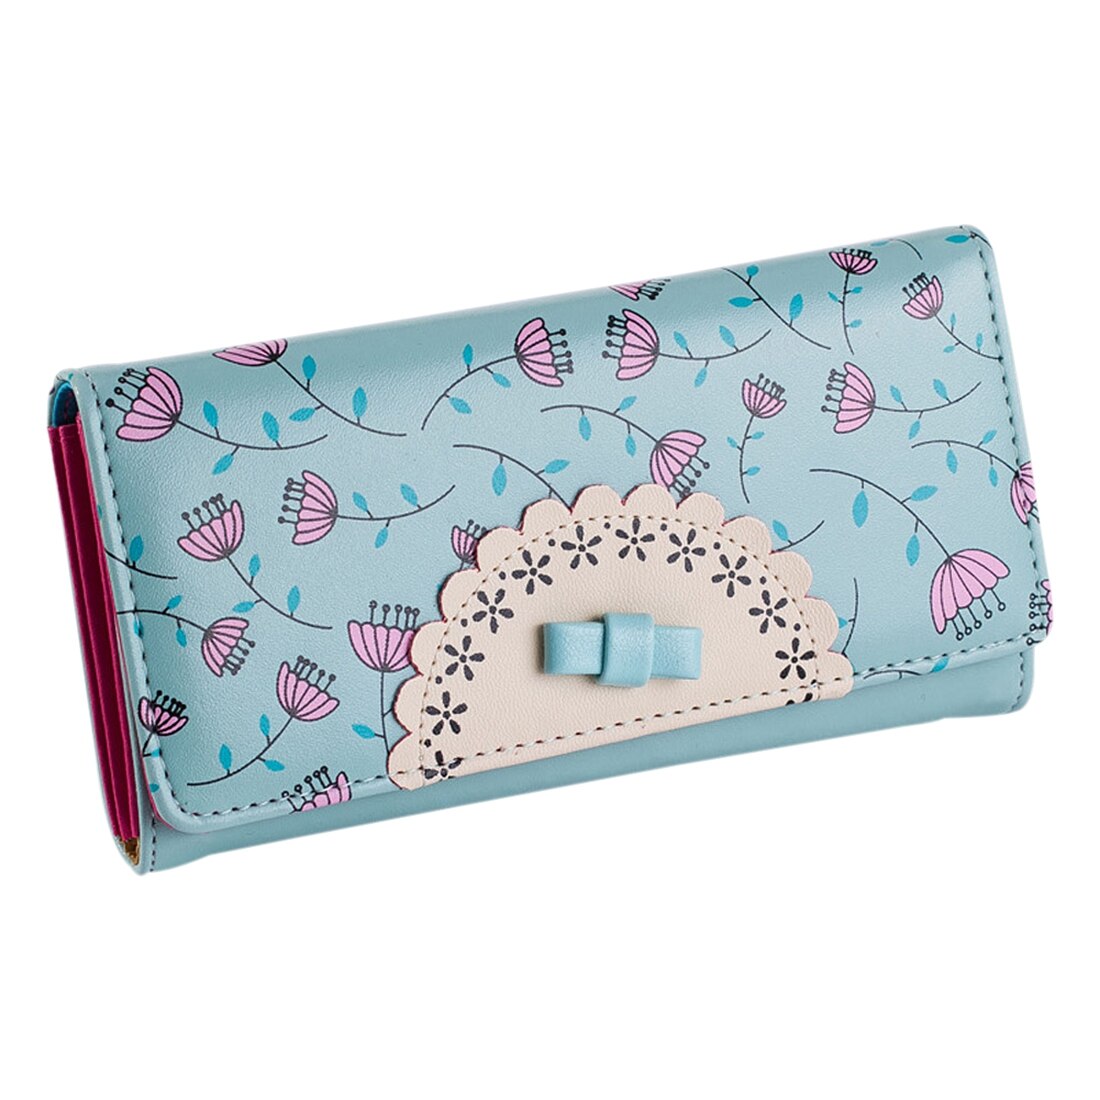 Wallet for women wallets brands purse dollar price printing designer purses card holder coin bag female - ebowsos